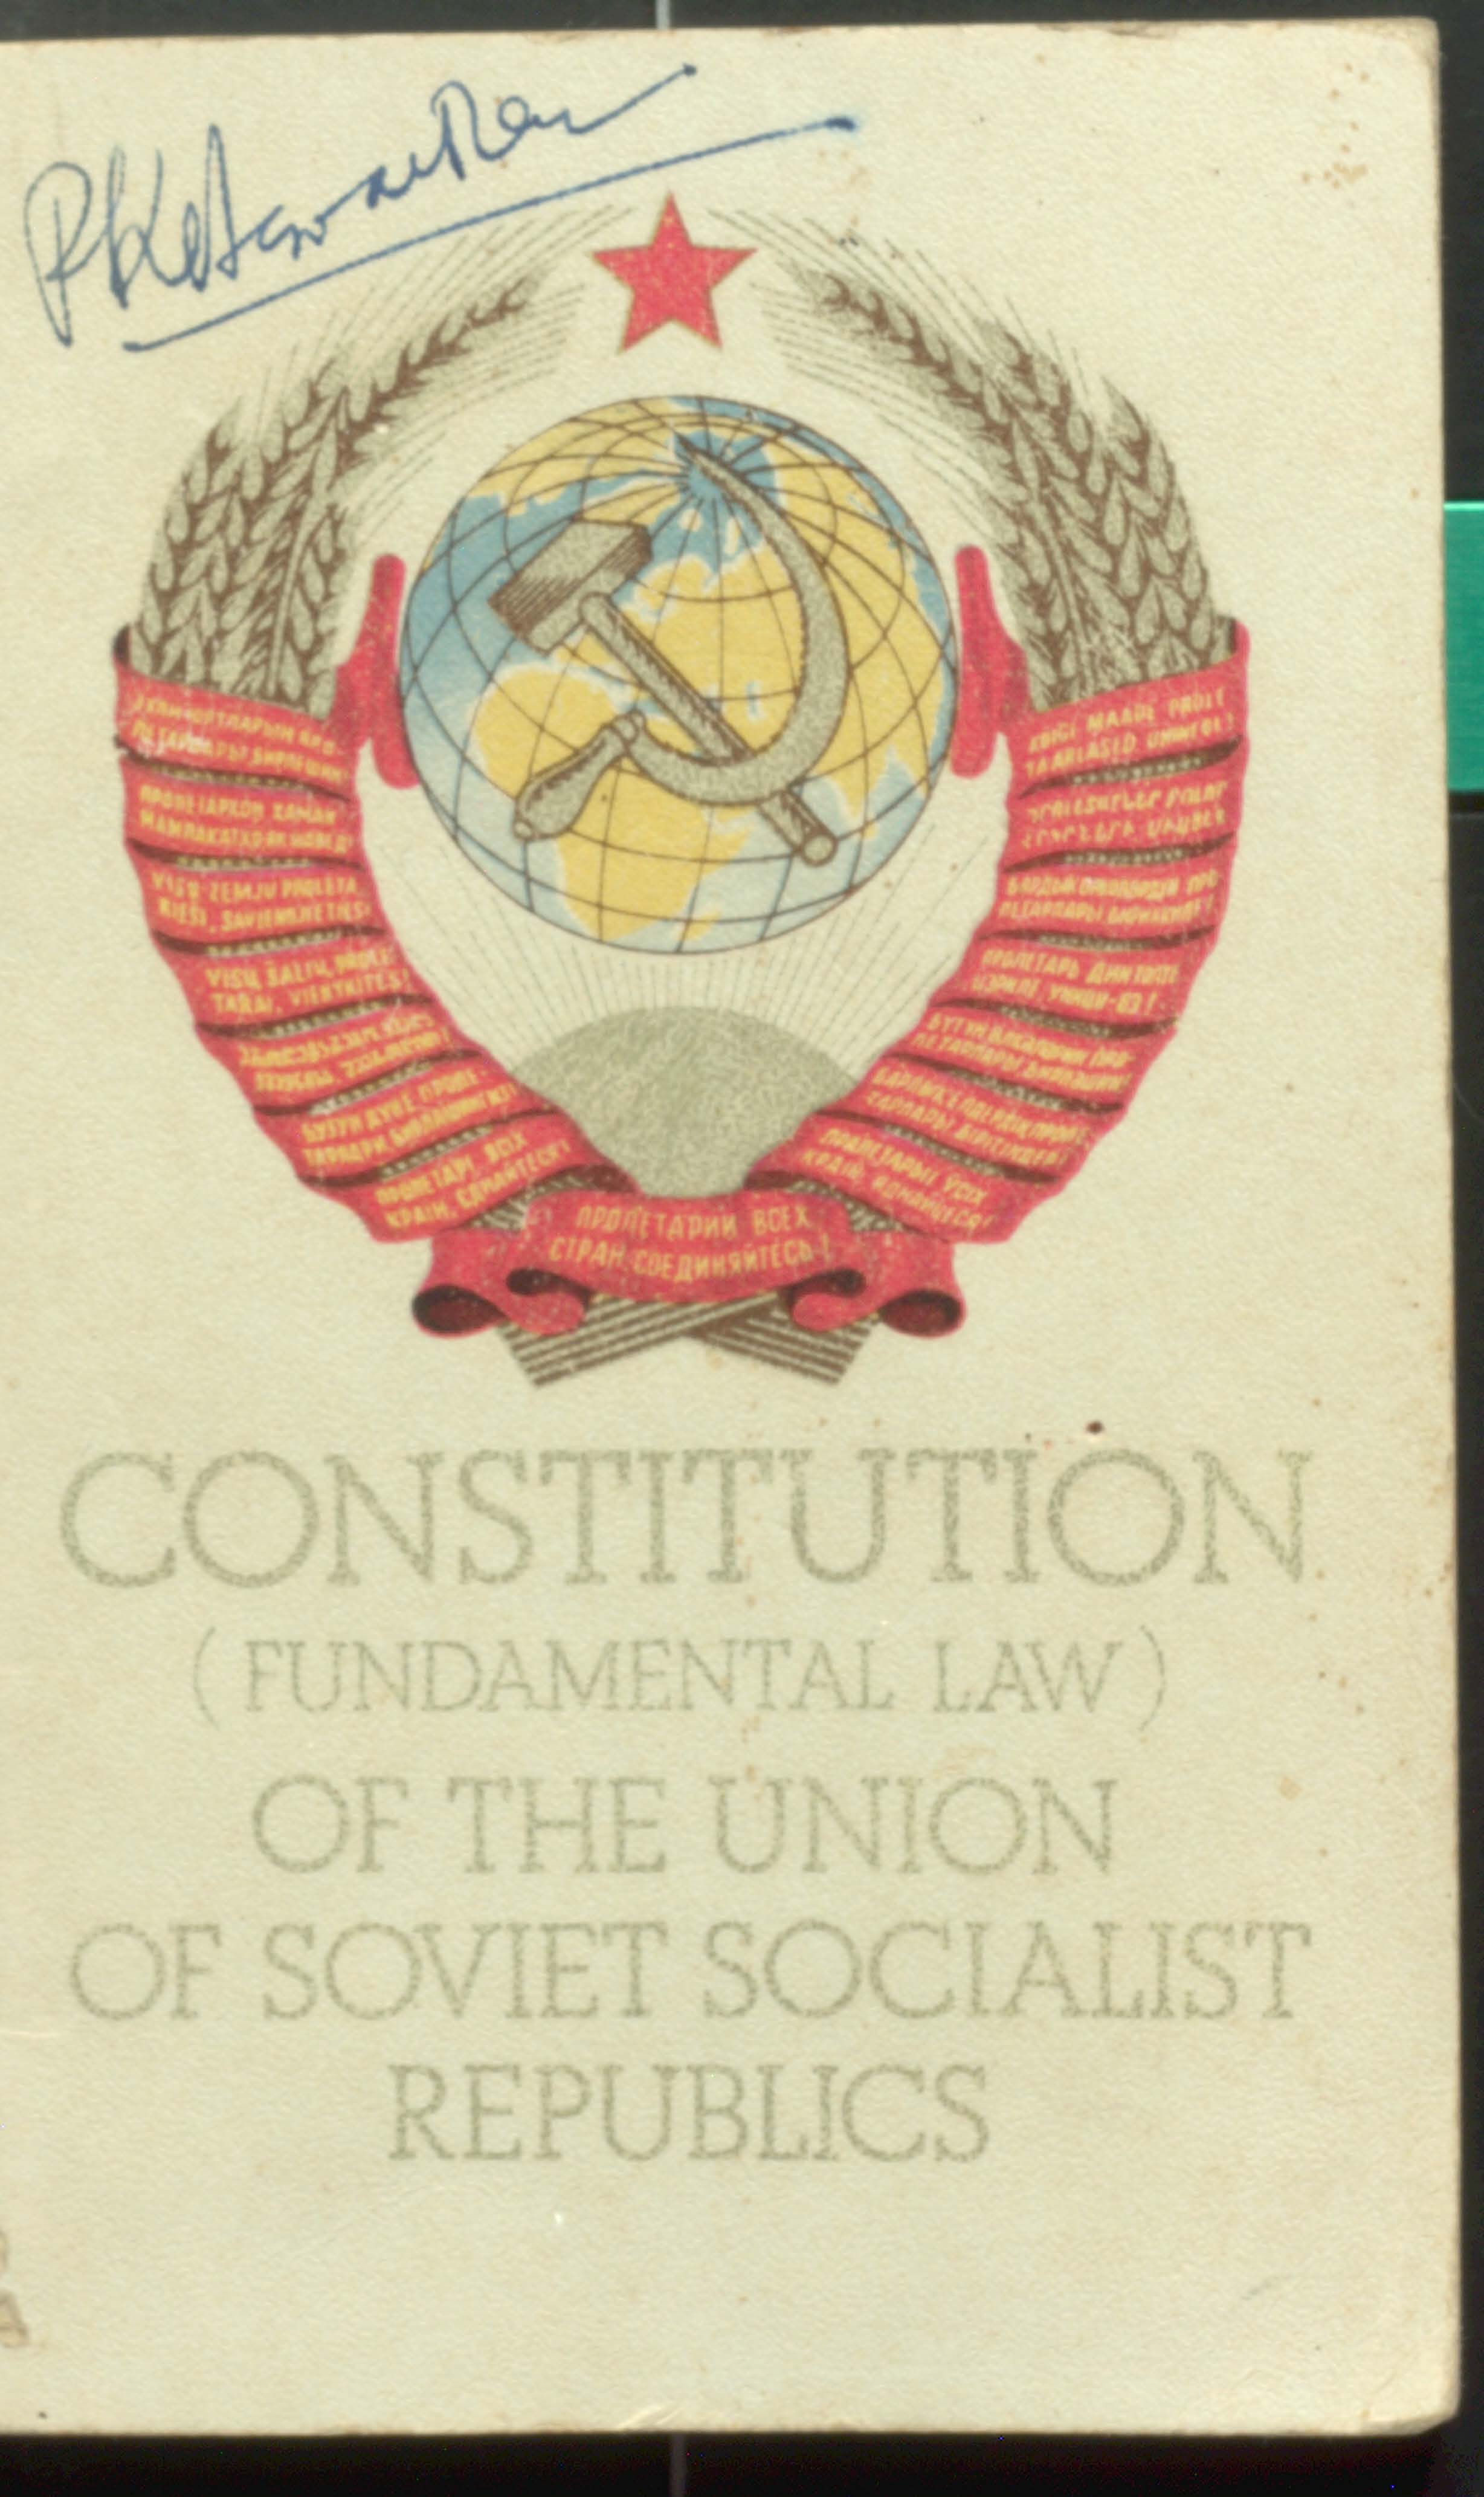 Constitution (fundamental law) of the union of soviet socialist republics